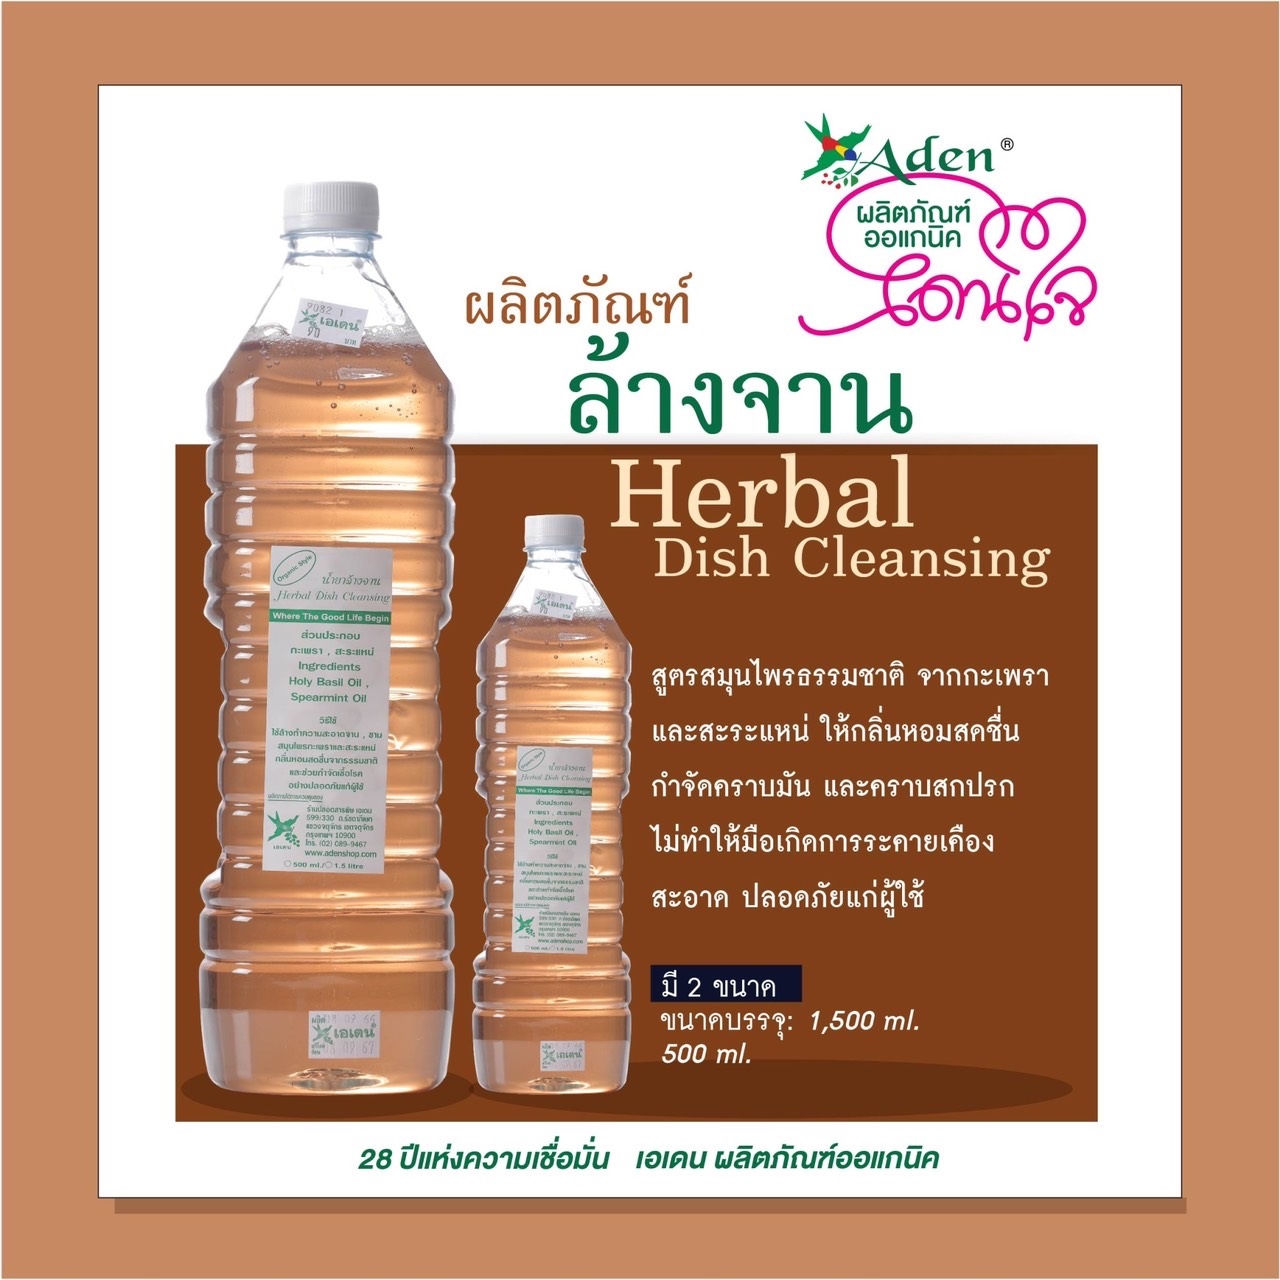 P11-0410 - : - น้ำยาล้างจาน  สูตรกะเพรา ( Herbal dish cleansing-Holy basil oil formula)